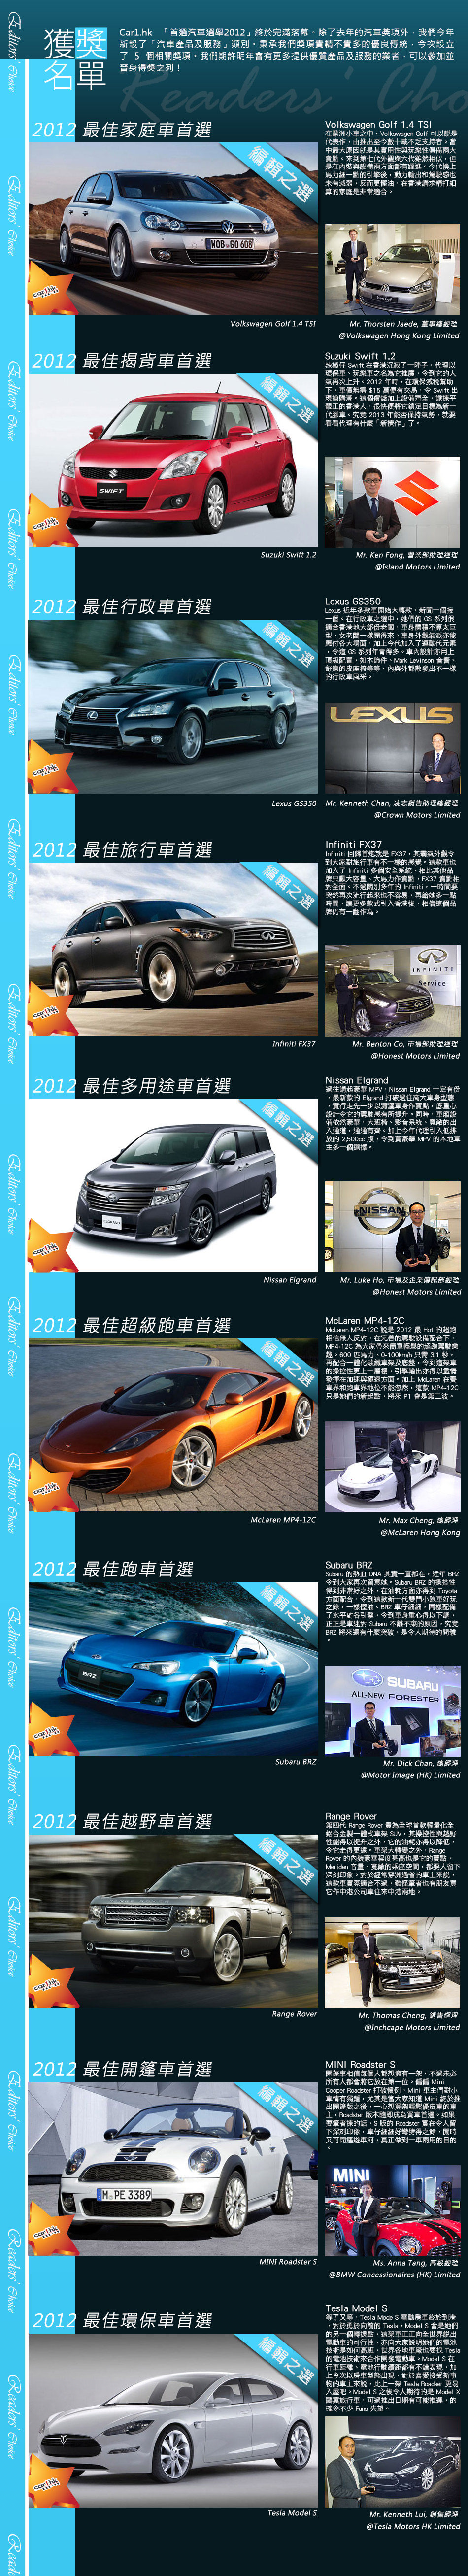 Car1.hk「首選汽車選舉 2012」「Editor’s Choice 編輯首選」